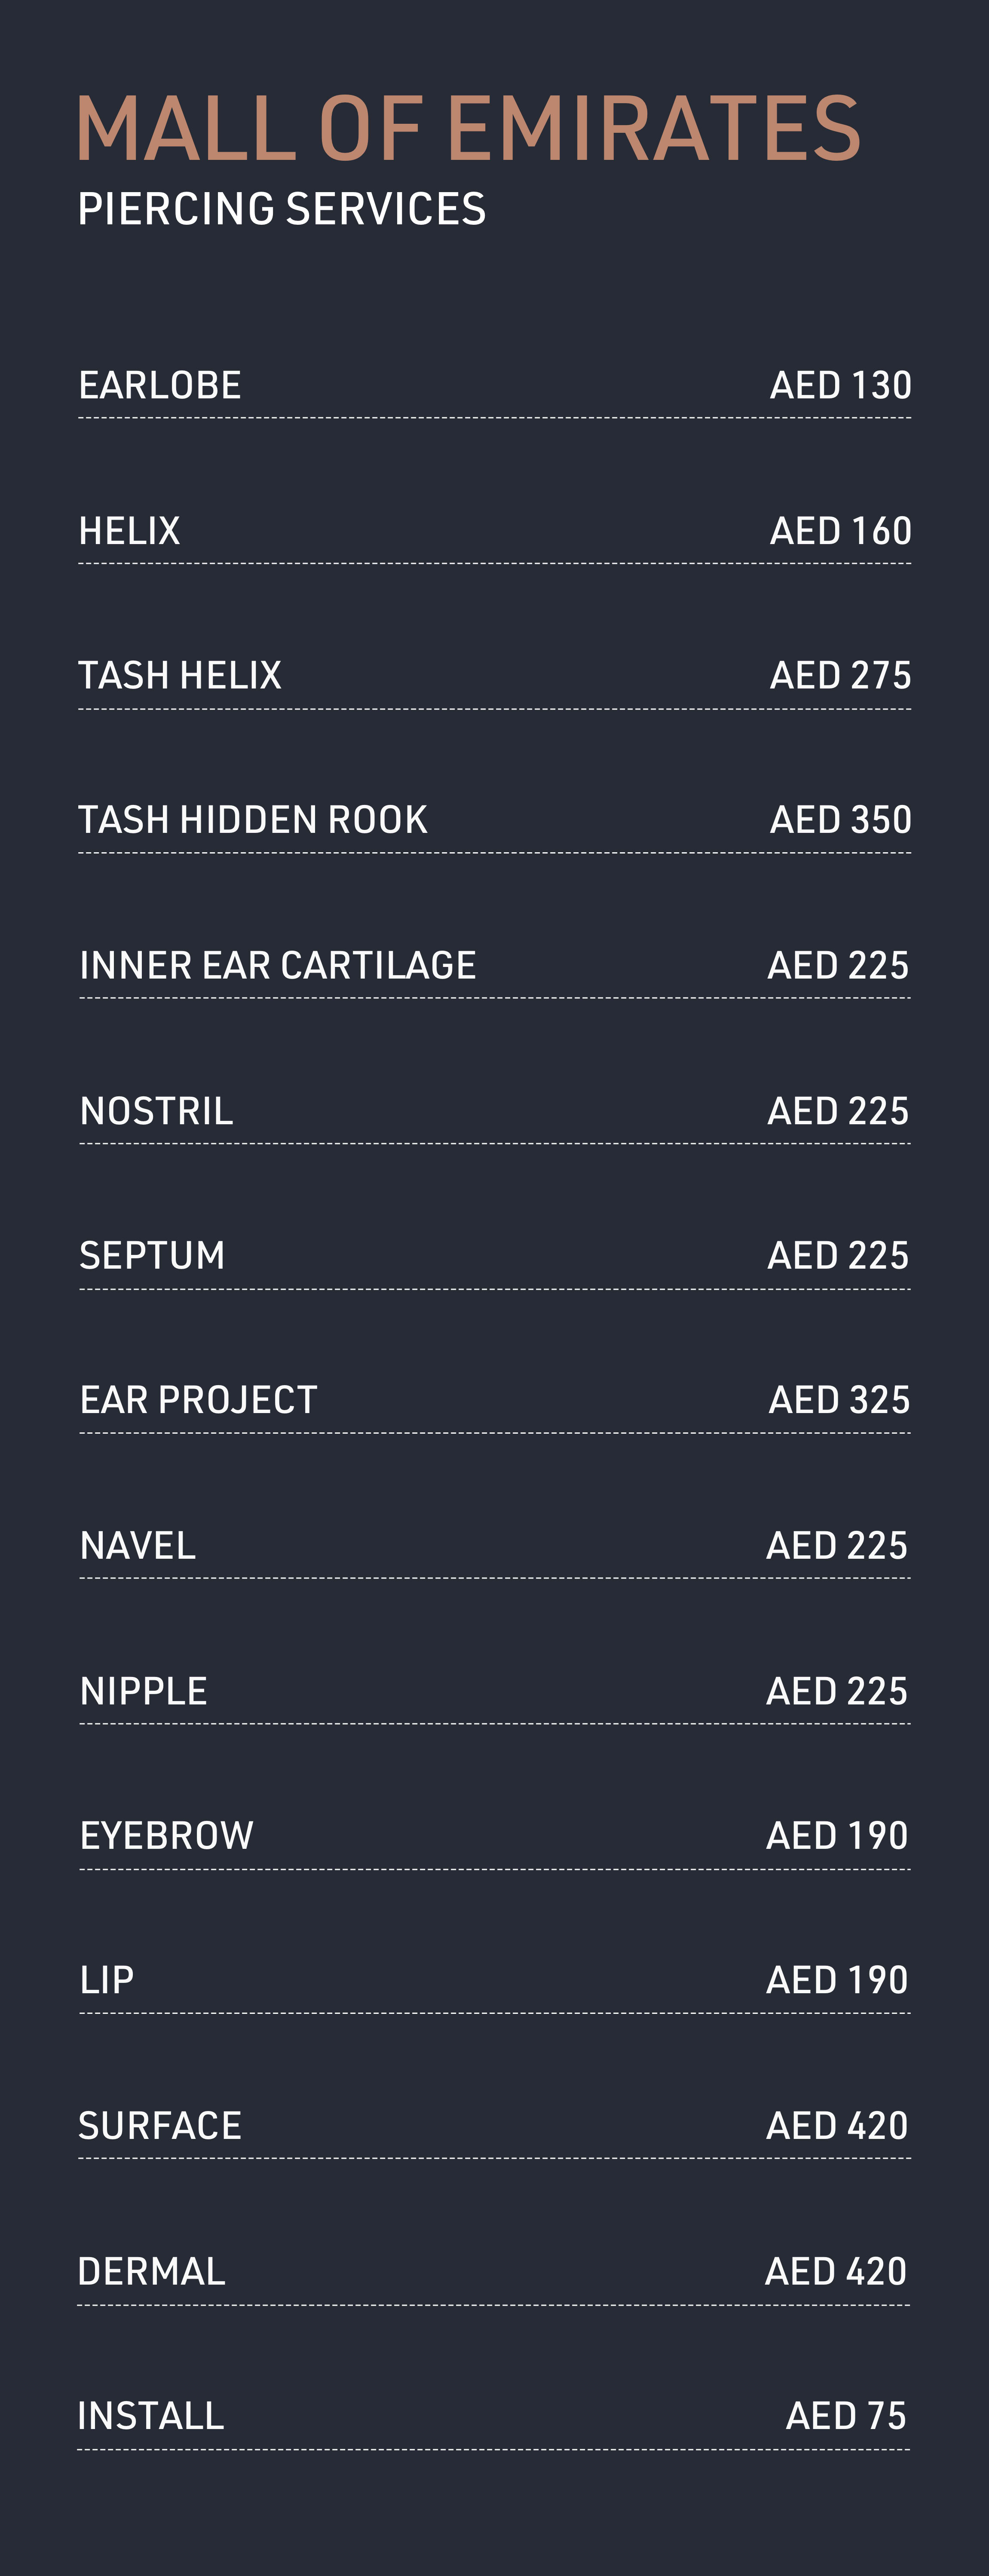 Dubai Piercing prices for earlobe, helix, body, nostril, nipple, cartilage piercings